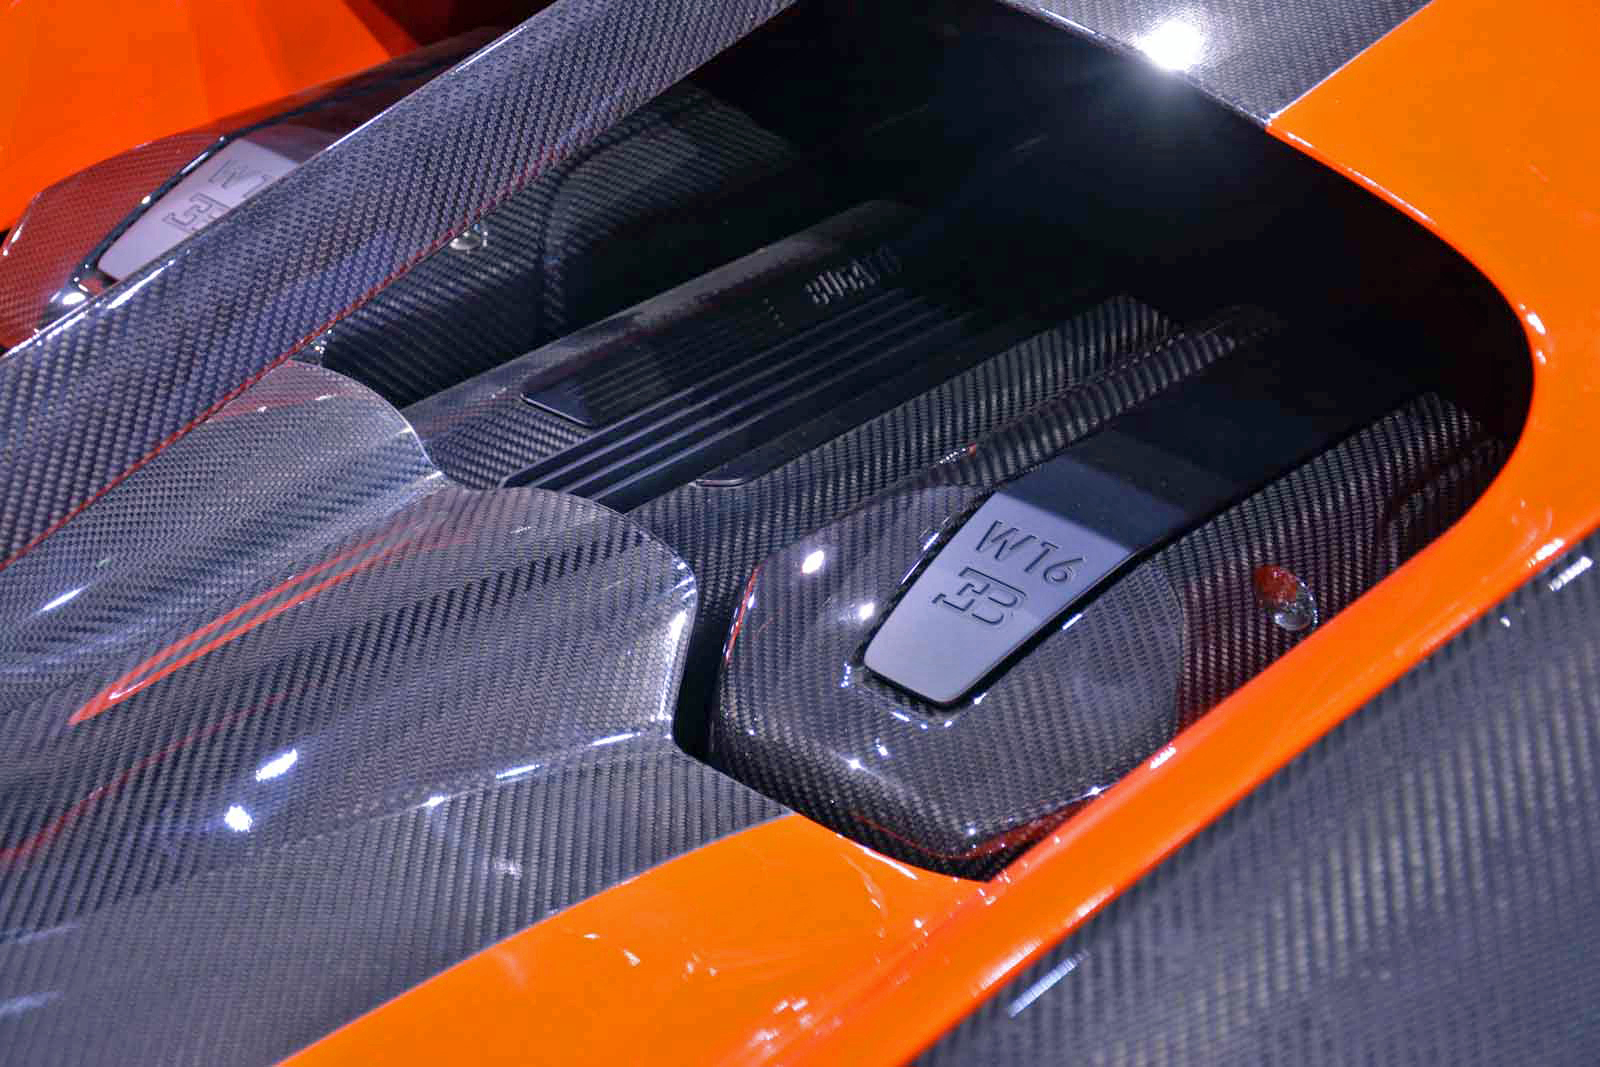 304 mph bugatti chiron becomes the fastest car in world rg ss300plus 06